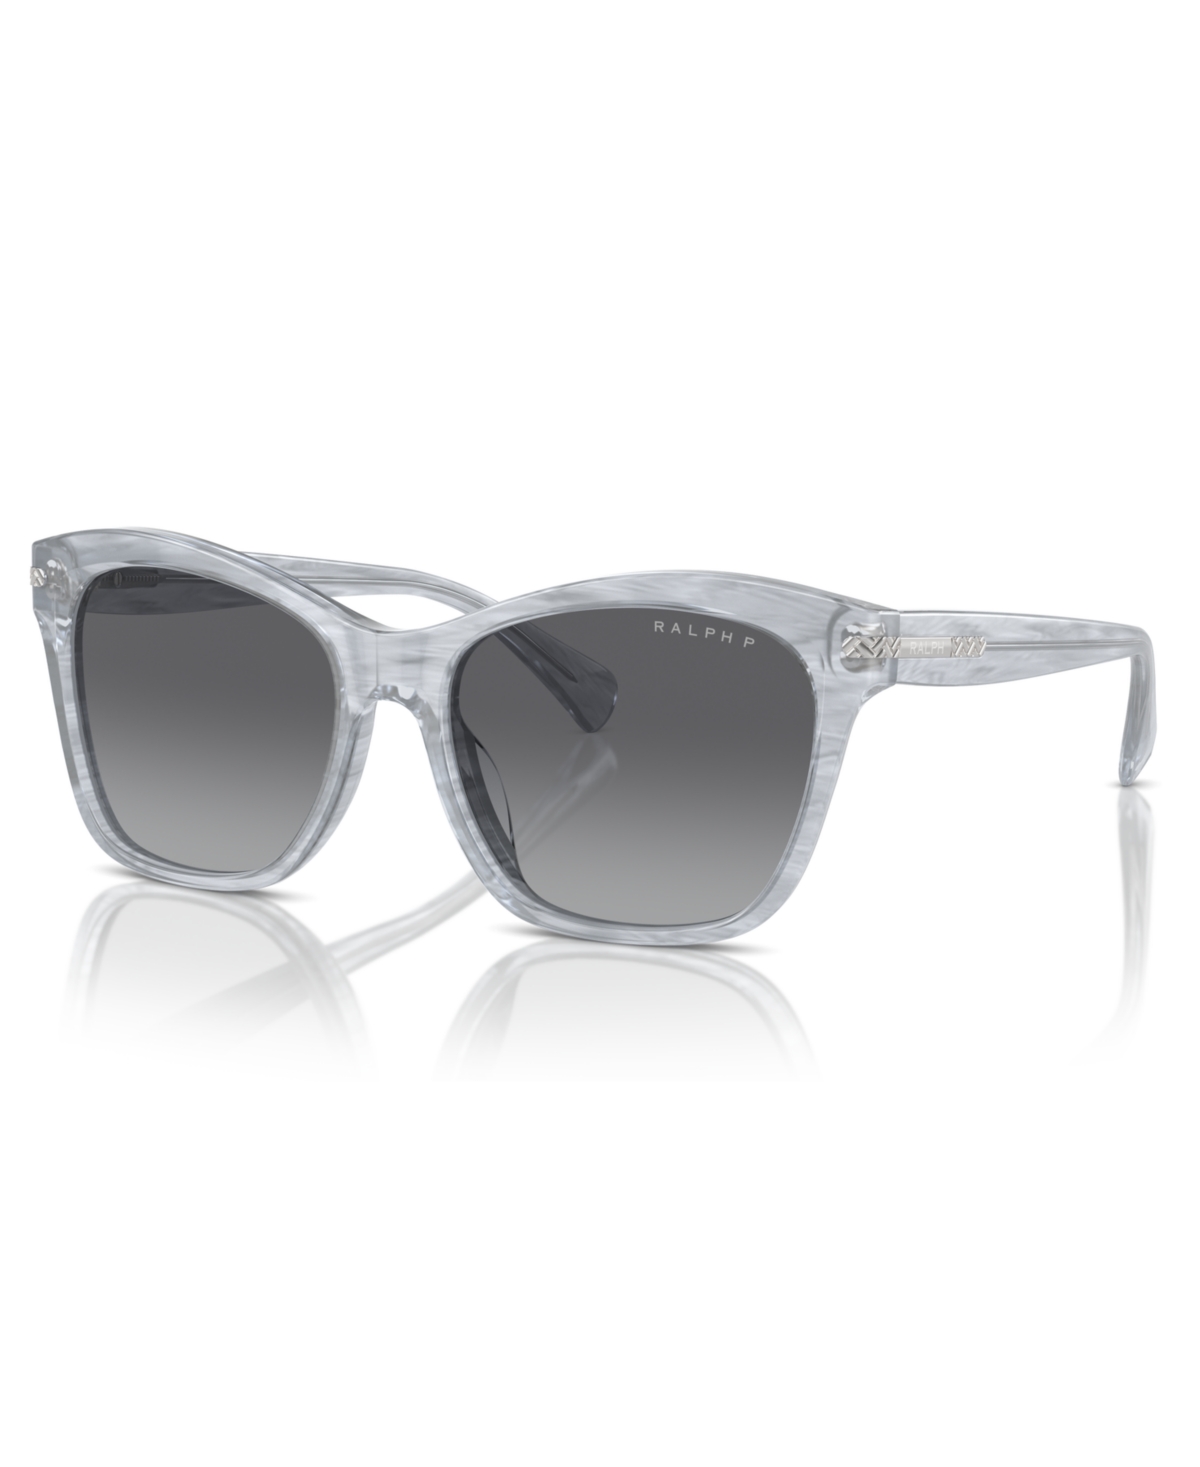 Women's Polarized Sunglasses, Ra5310U - Striped Gray